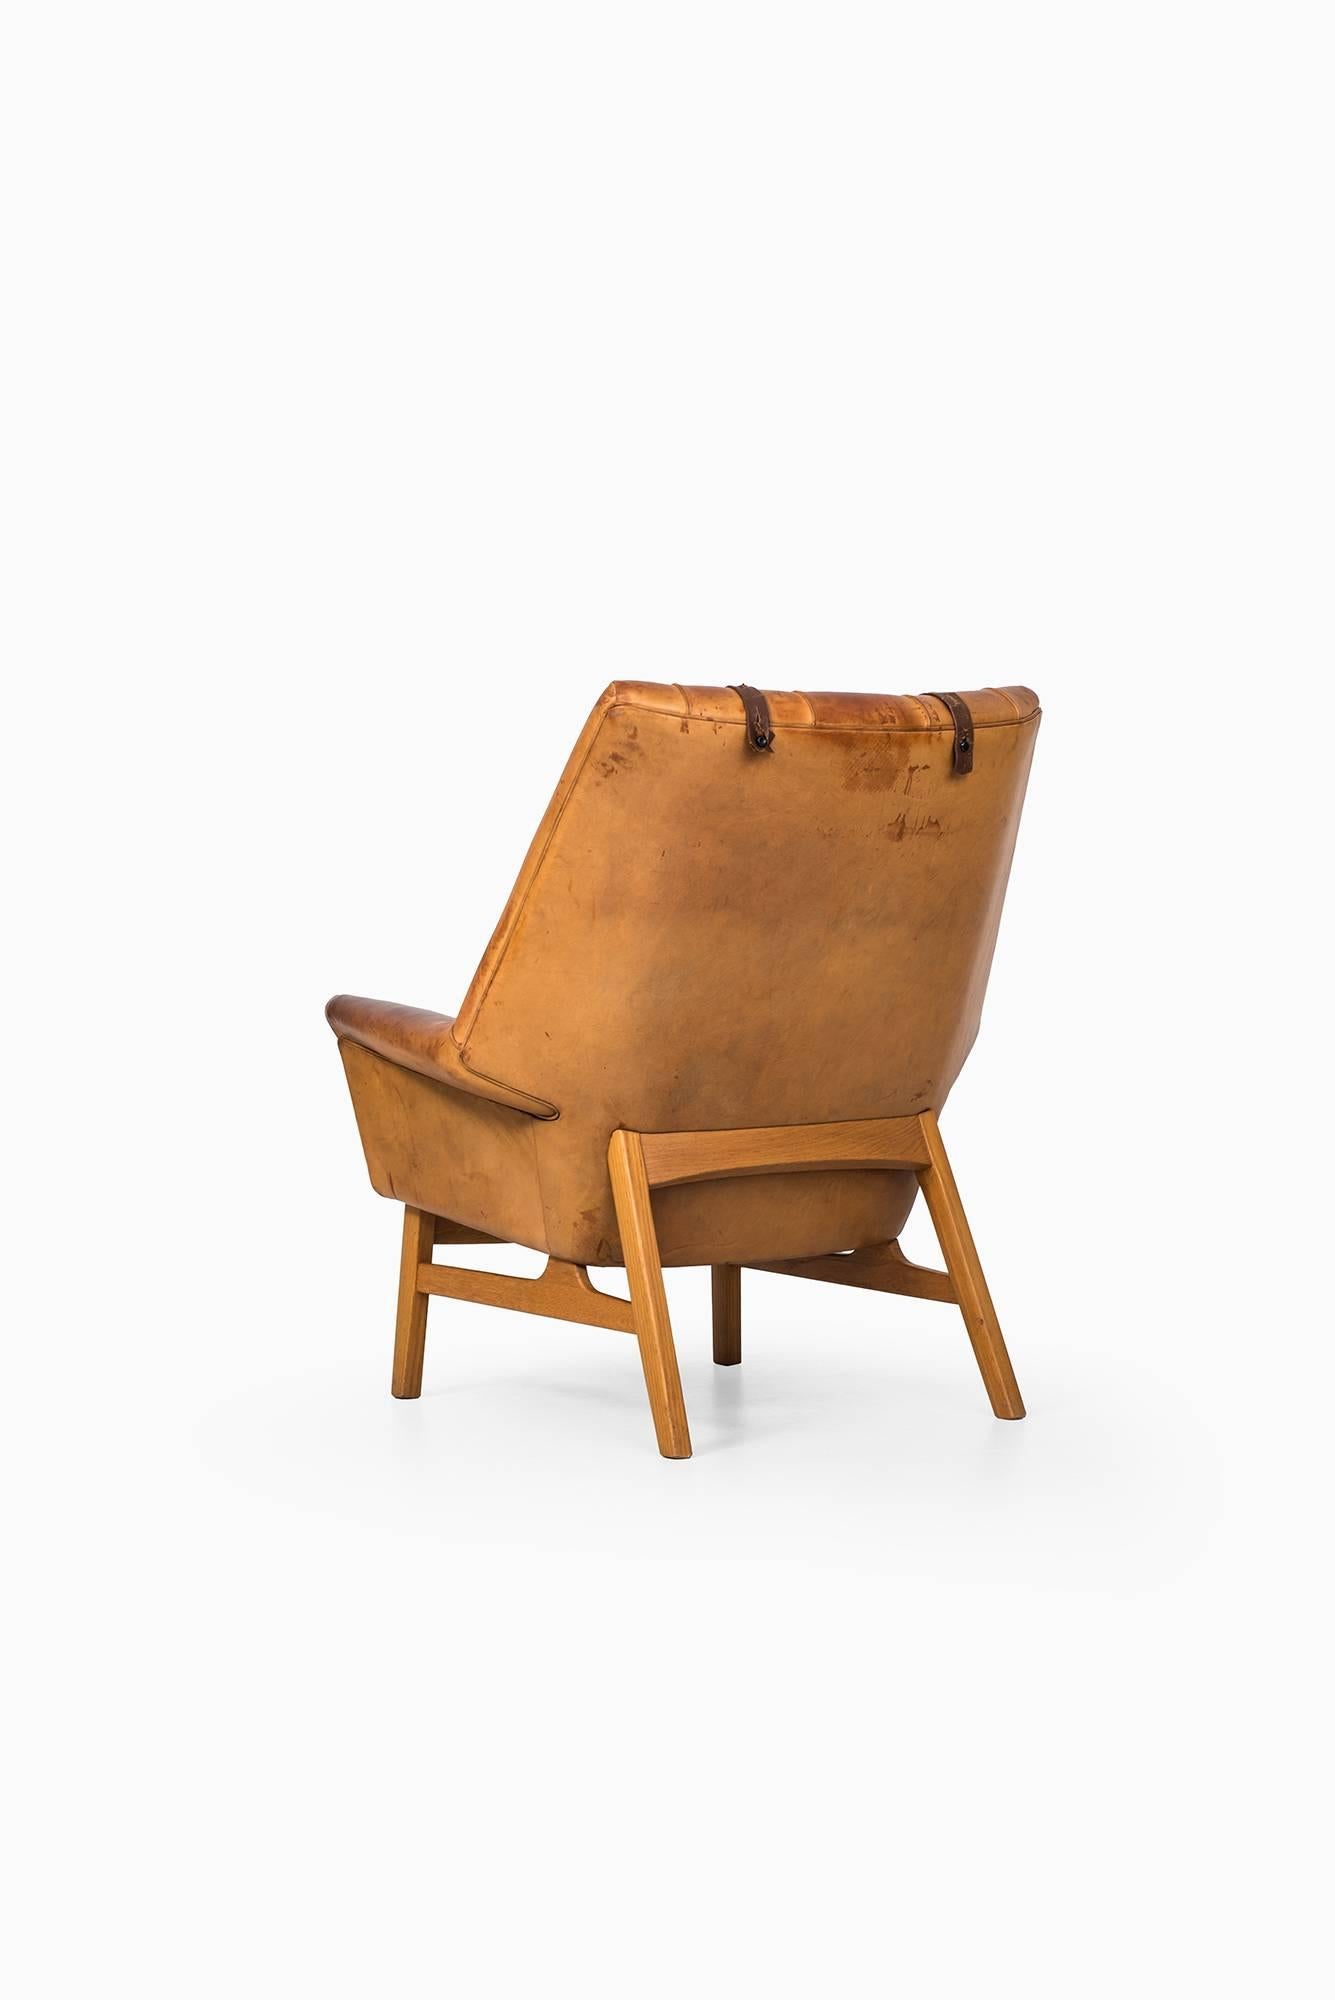 Danish Tove & Edvard Kindt-Larsen Easy Chair Model Glimminge by Ope in Sweden